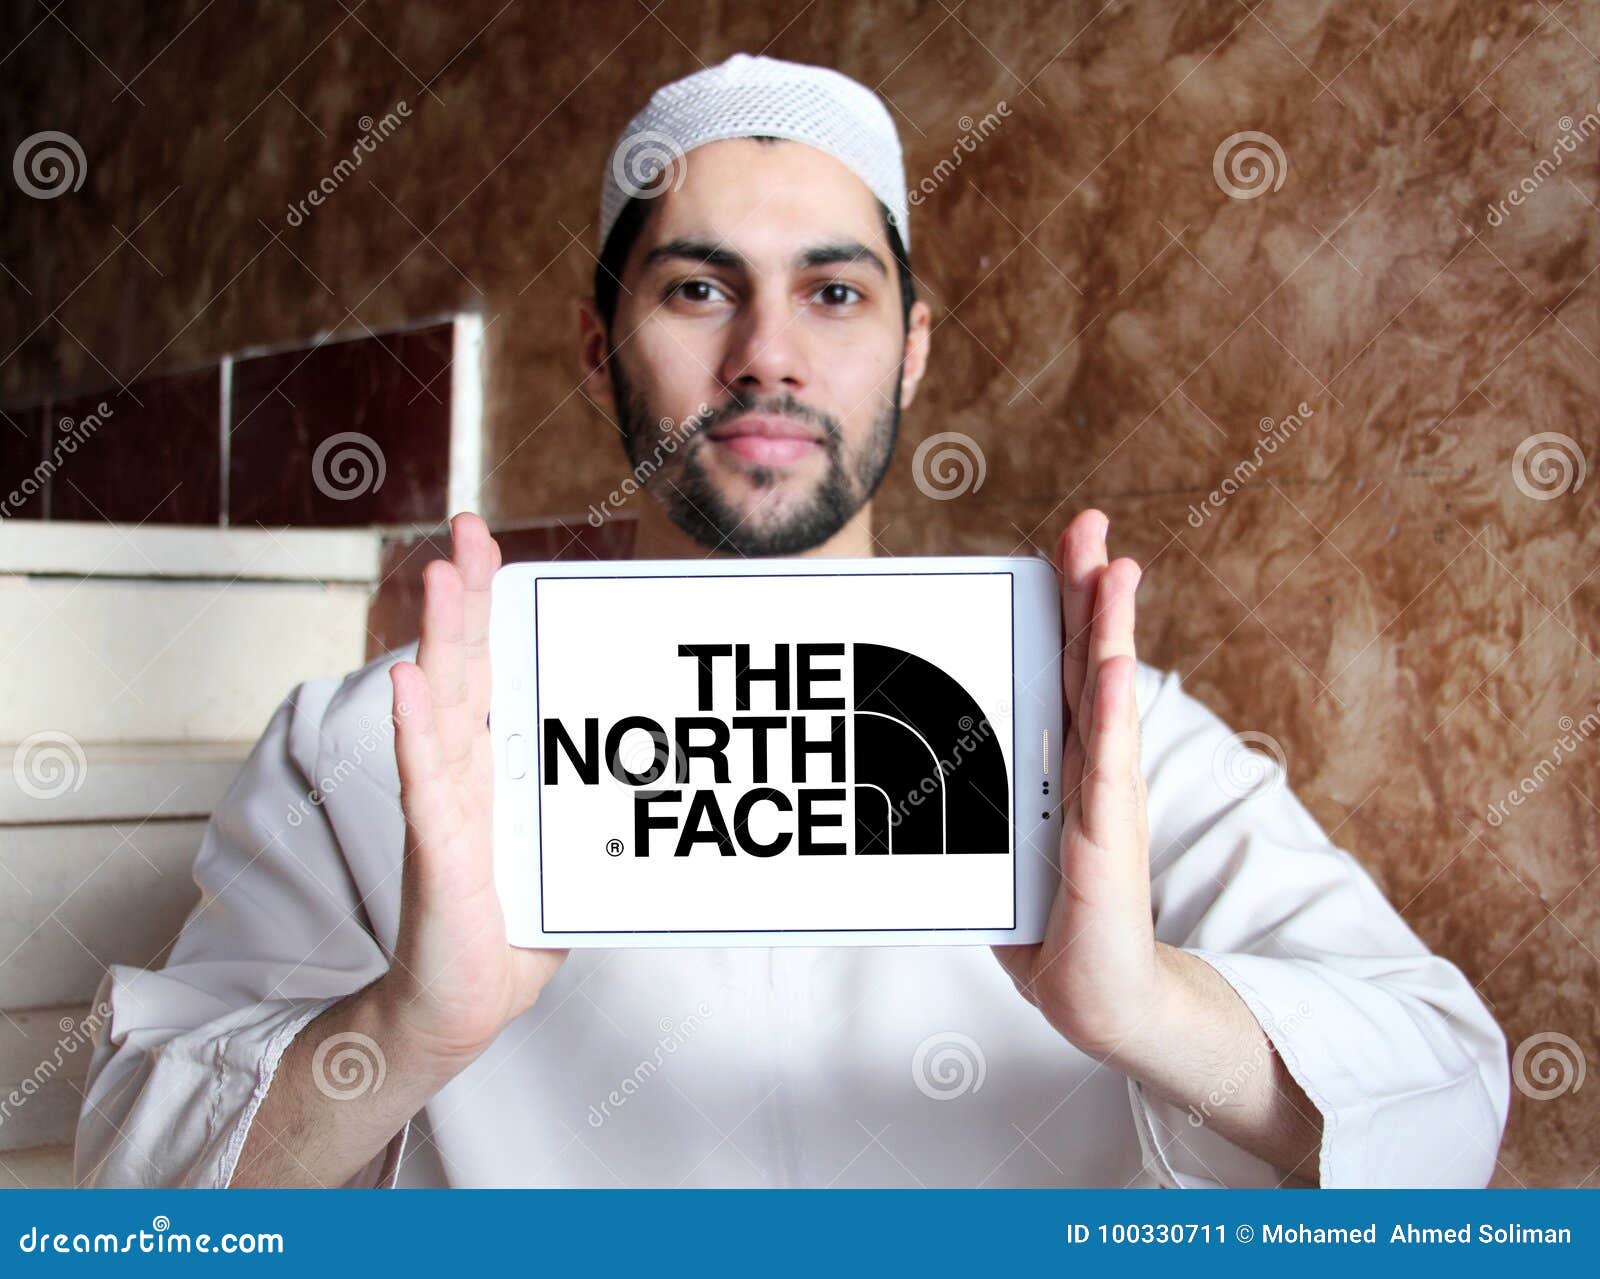 yerleştirmek Vatan genlik  The North Face Company Logo Editorial Photo - Image of fleece, editorial:  100330711